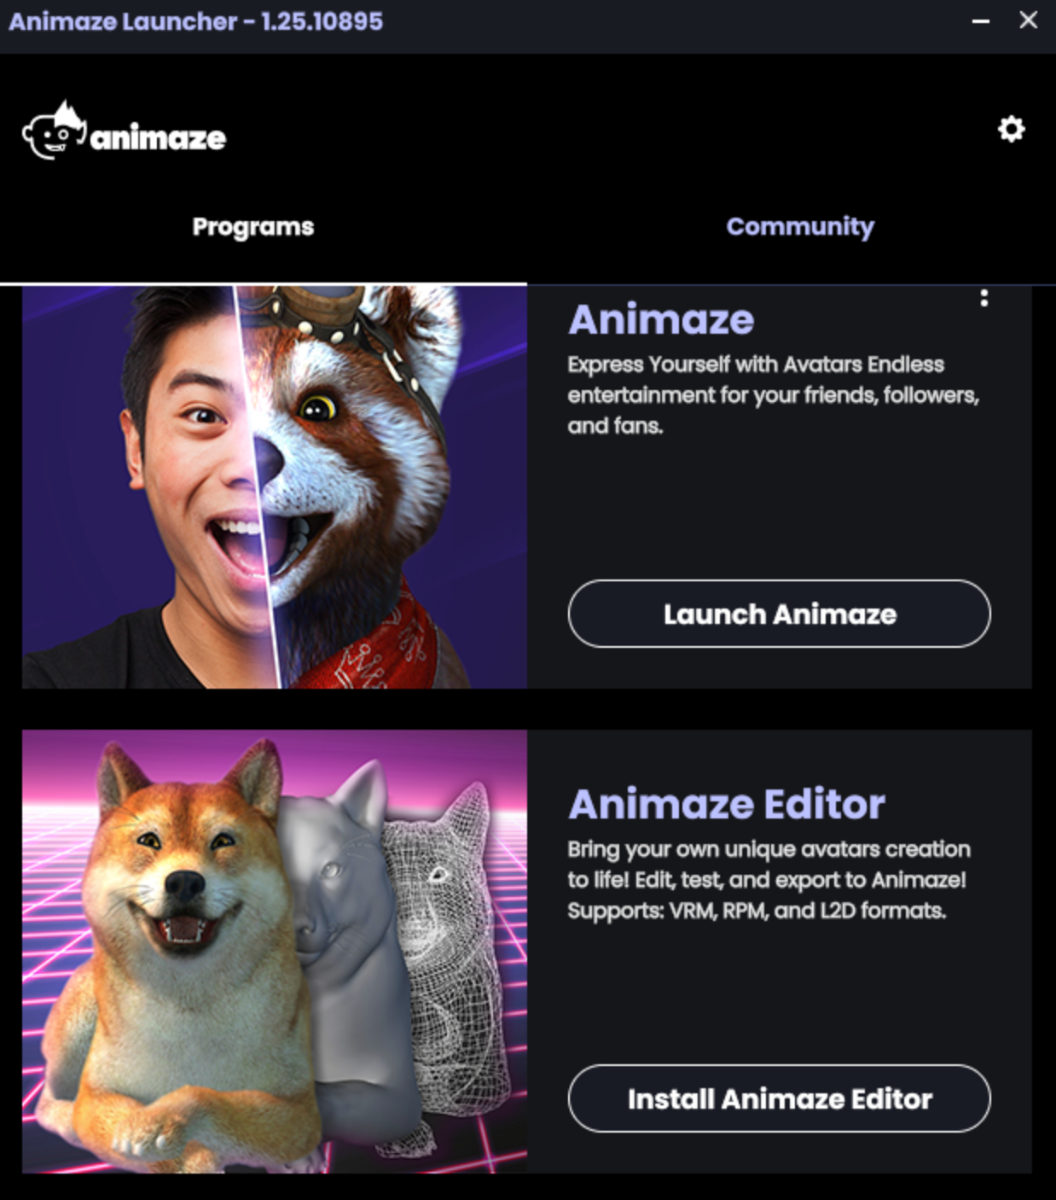 Download the Animaze Editor